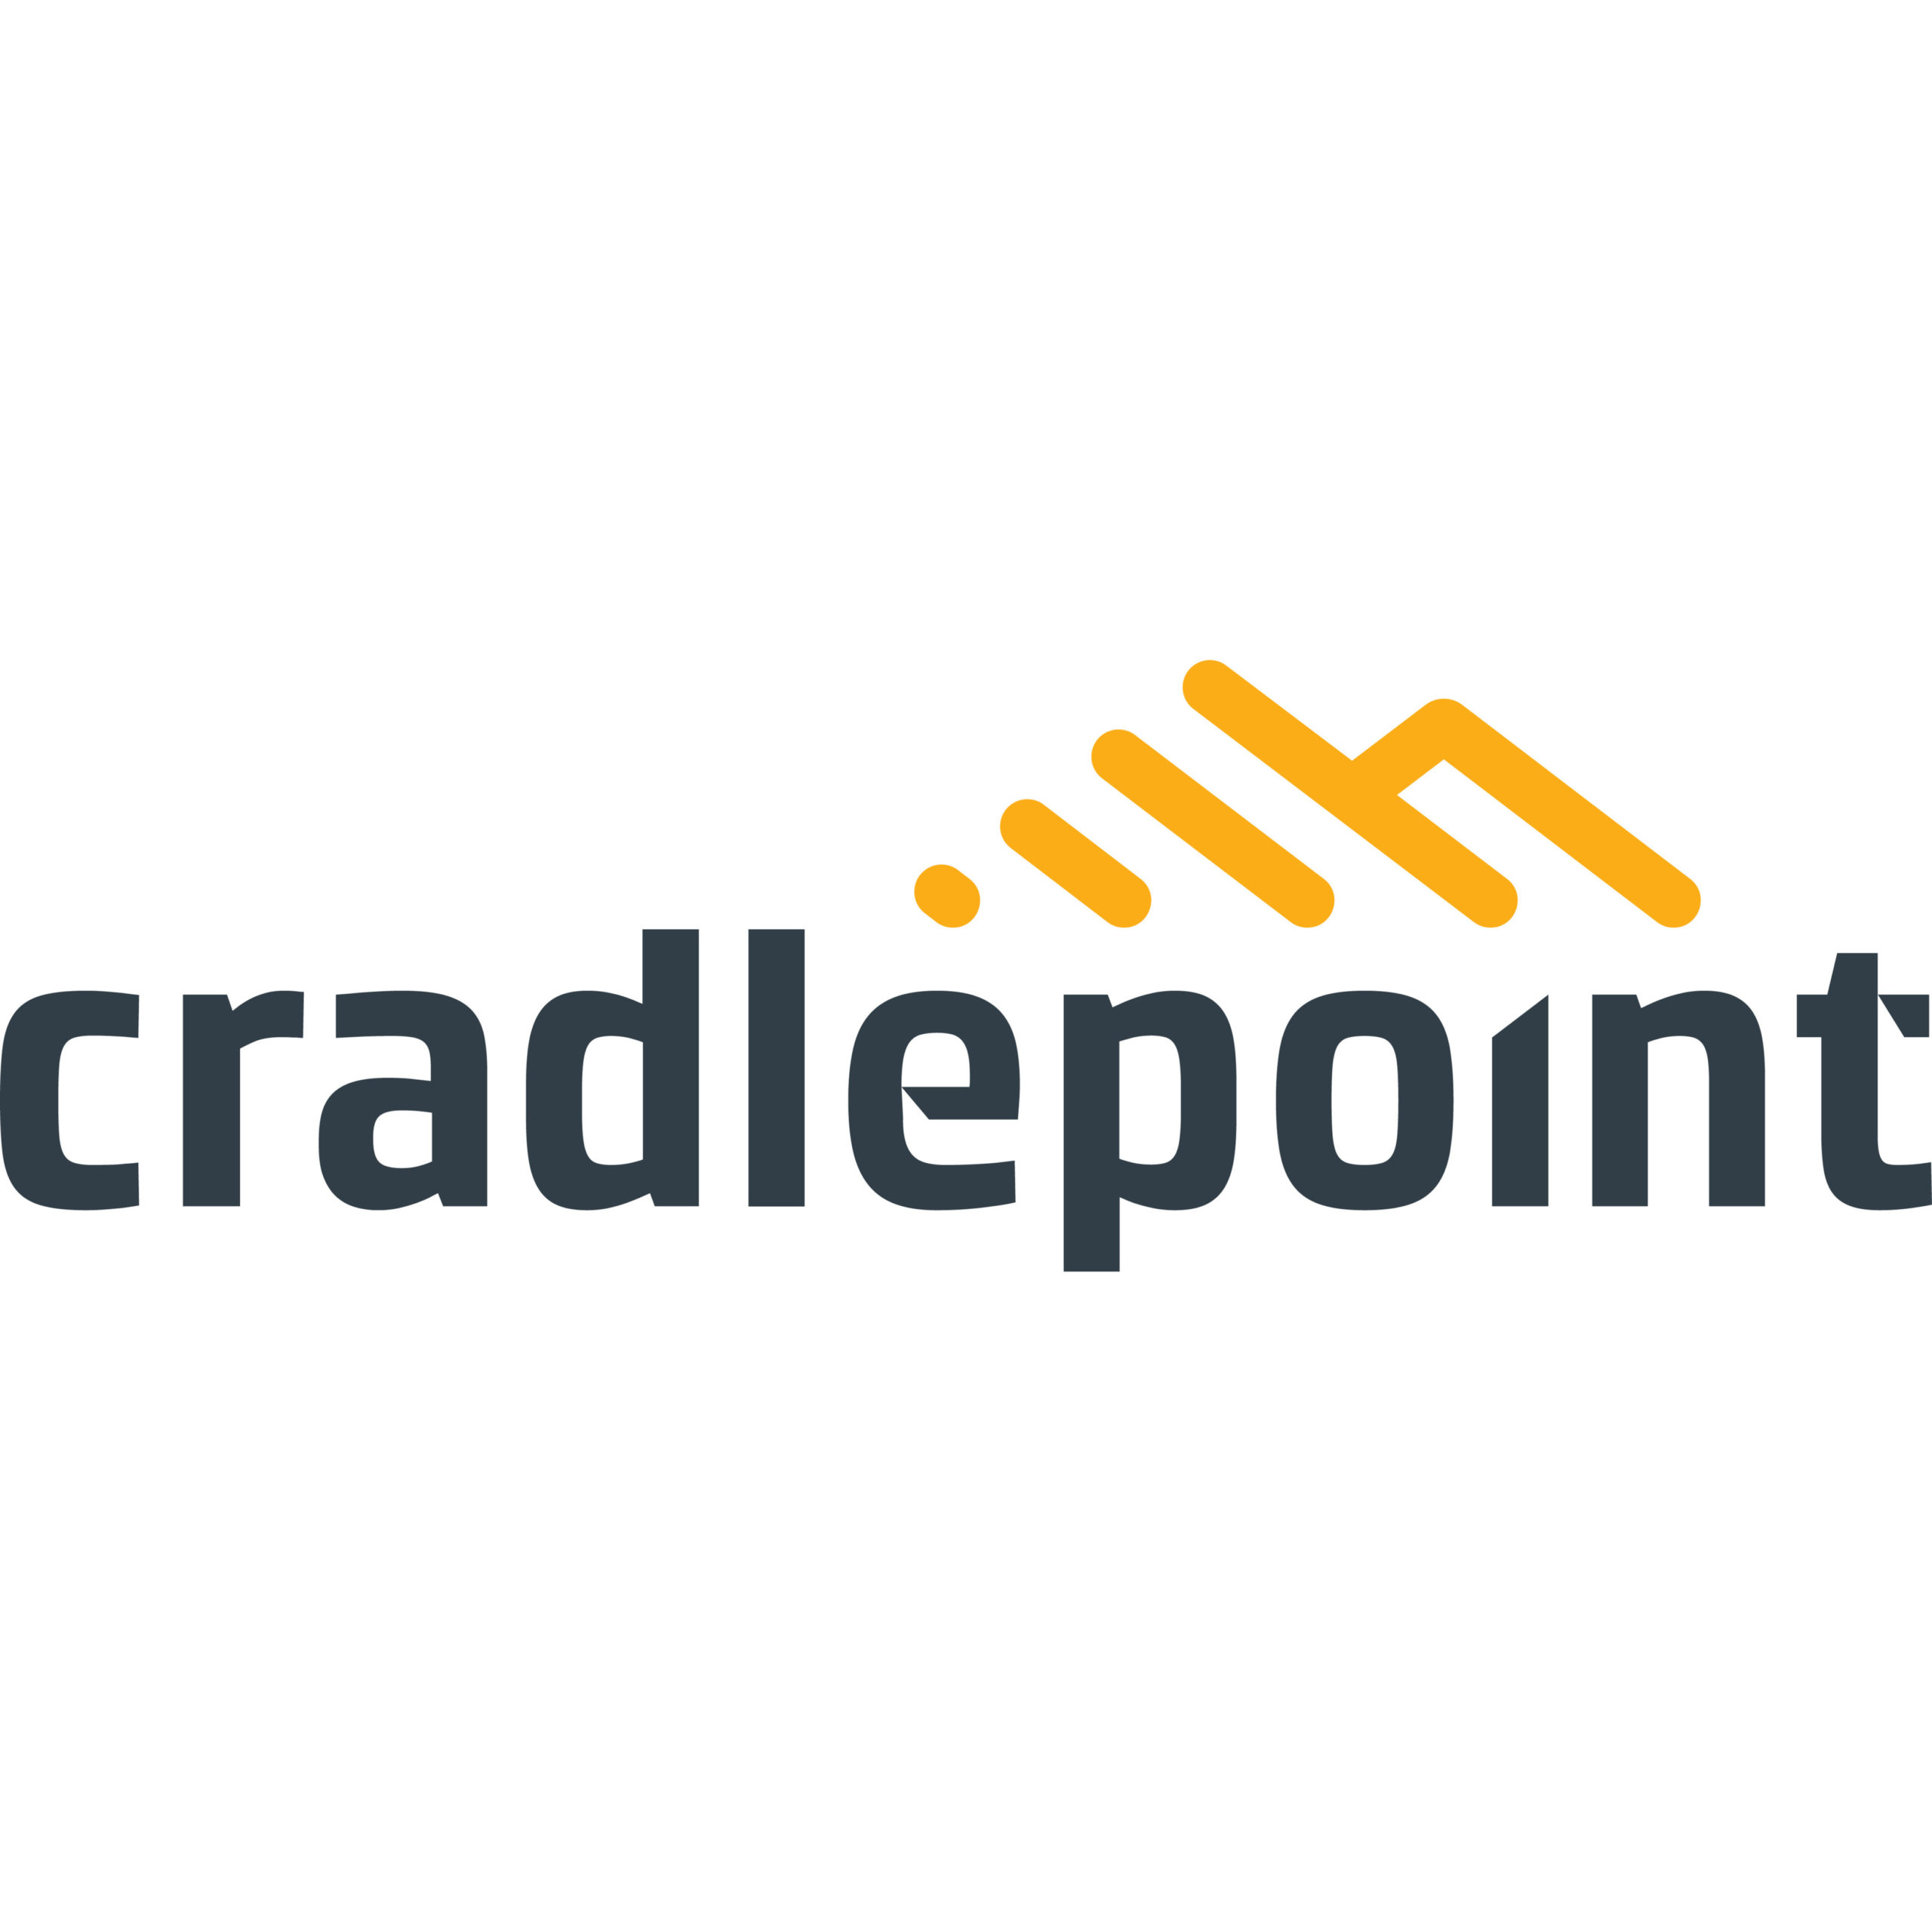 CradlePoint NetCloud Enterprise Branch Essentials + Advanced Plan + 24×7 SupportSubscription License 1 License BFA3-NCEA-R